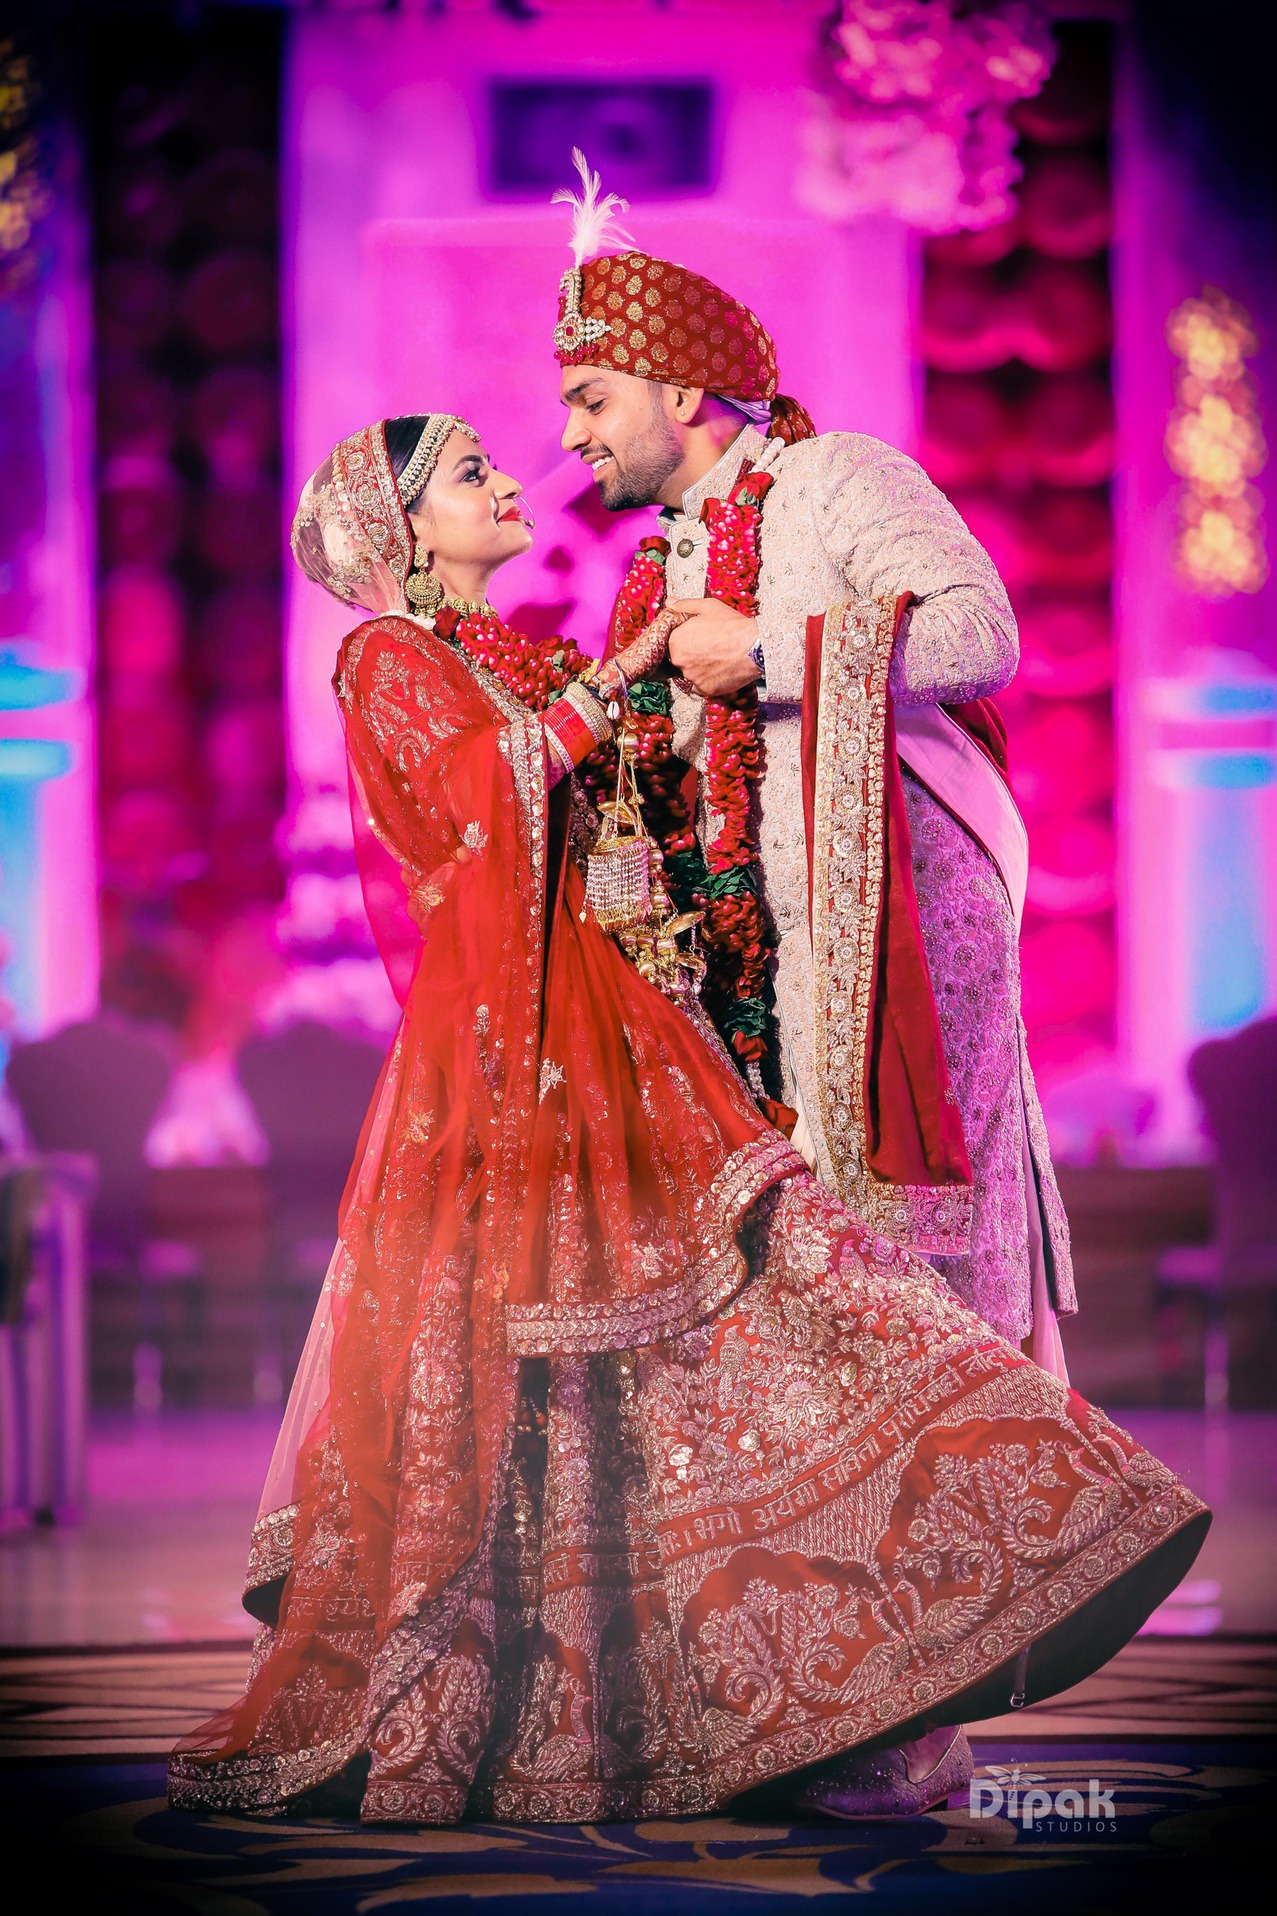 Pin by Sukhman Cheema on Punjabi Royal Brides | Wedding couple poses  photography, Indian wedding poses, Wedding couple poses